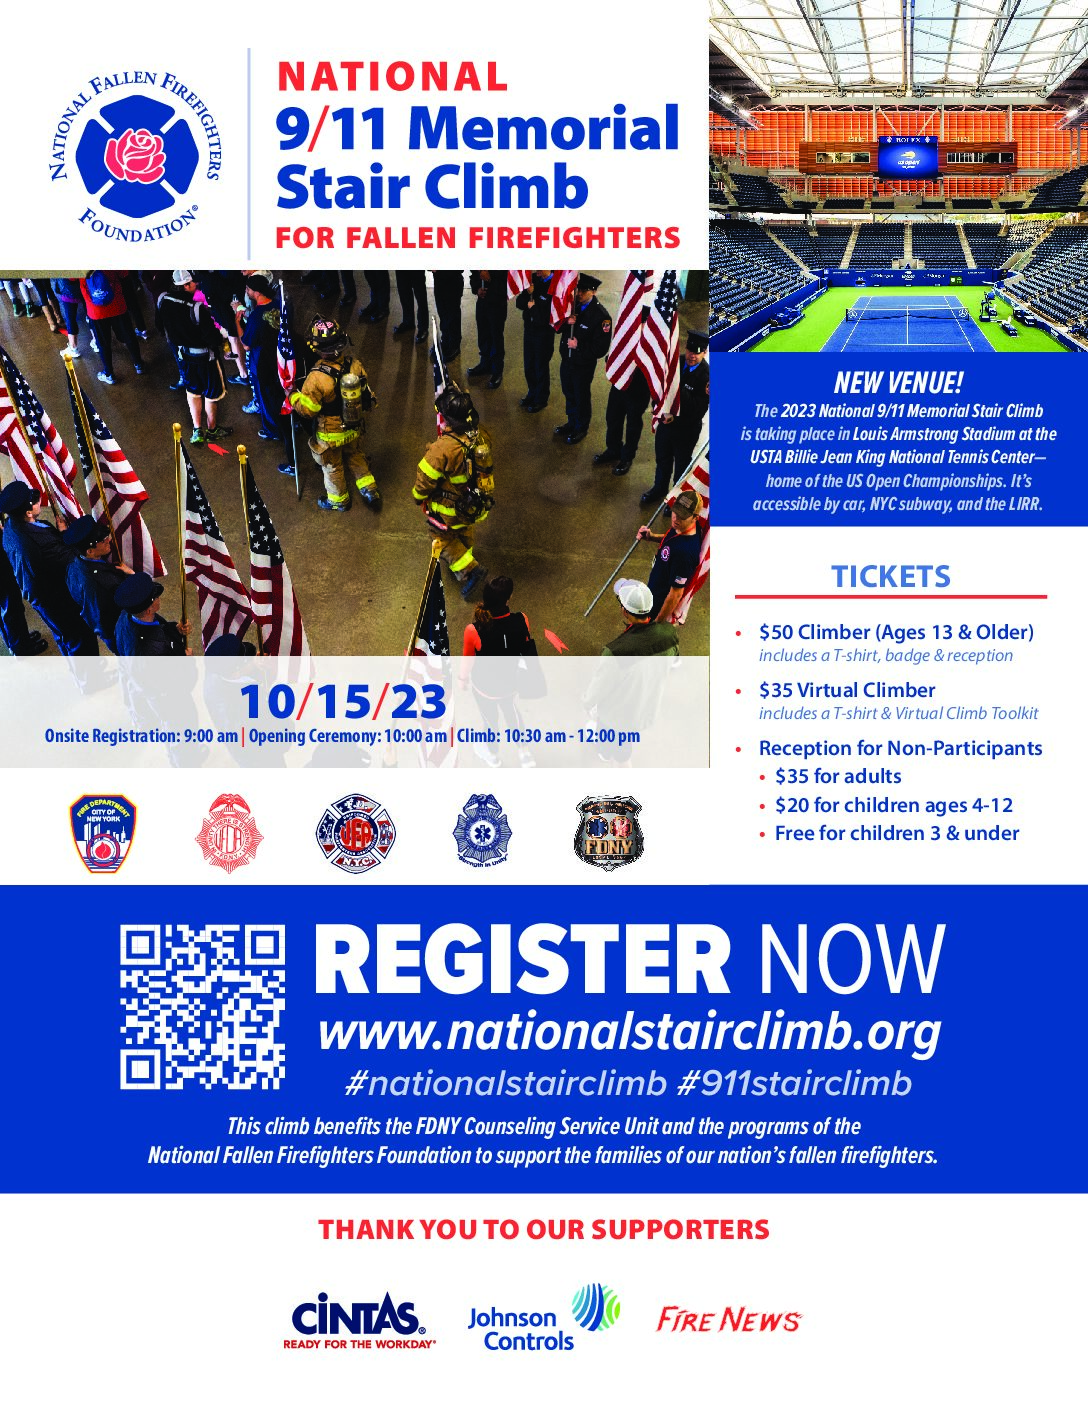 National 9/11 Memorial Stair Climb for Fallen Firefighters